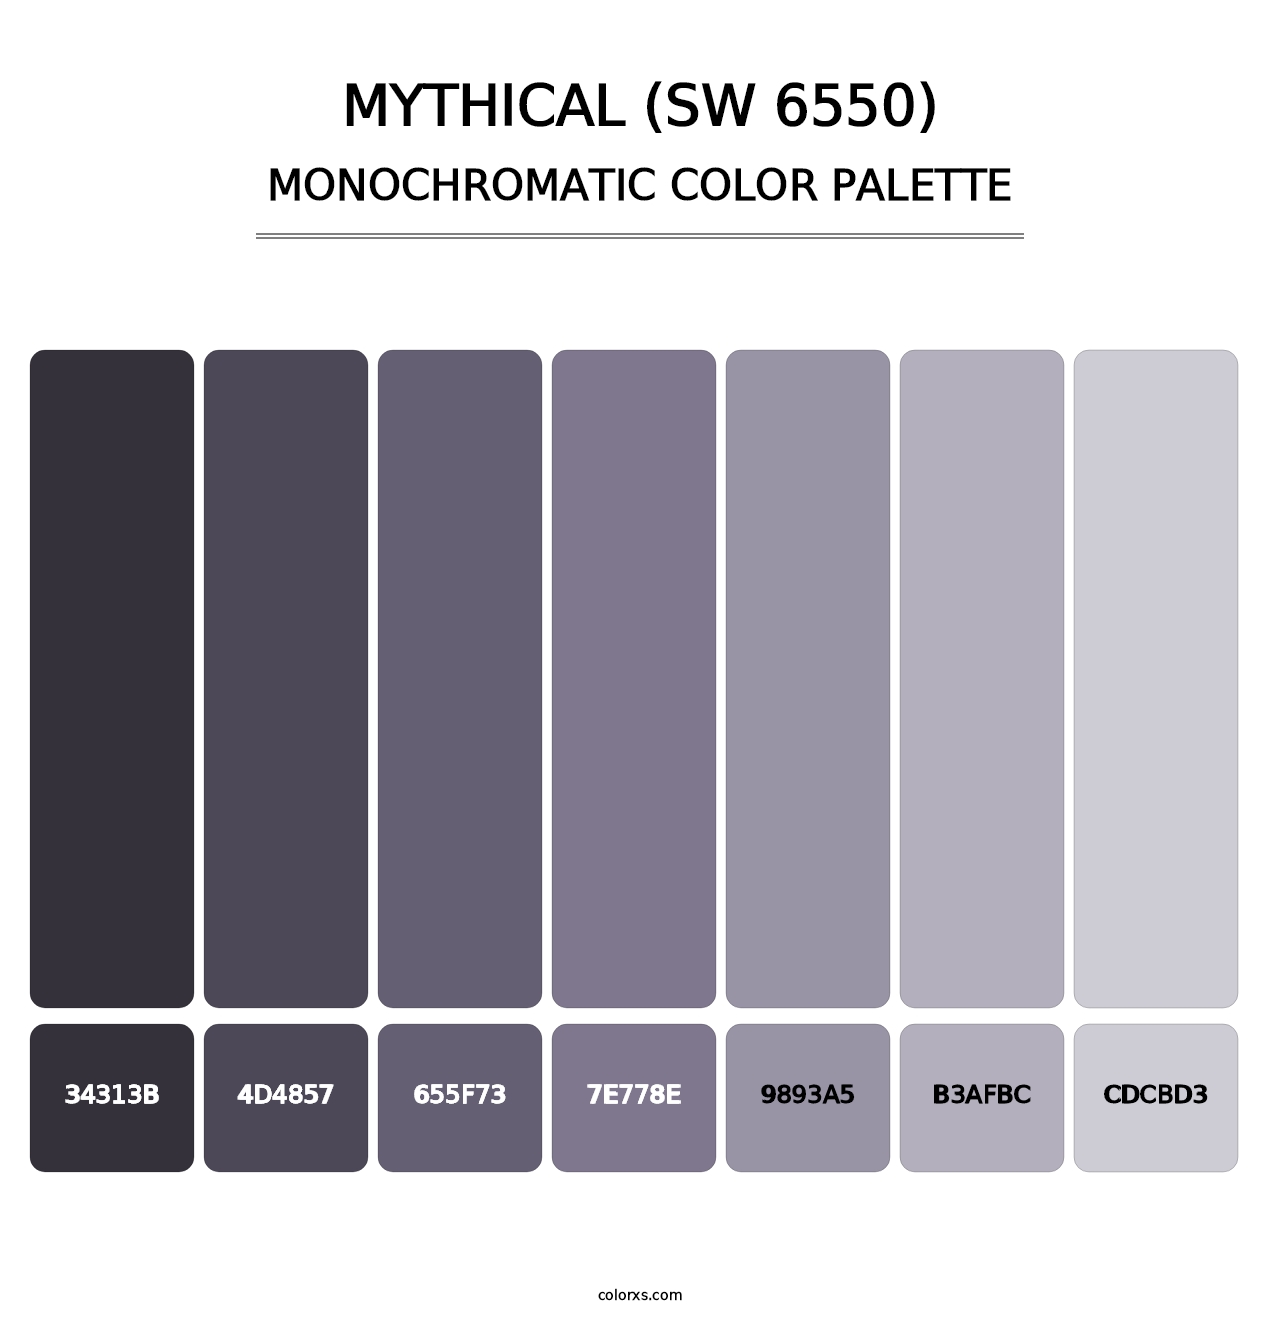 Mythical (SW 6550) - Monochromatic Color Palette